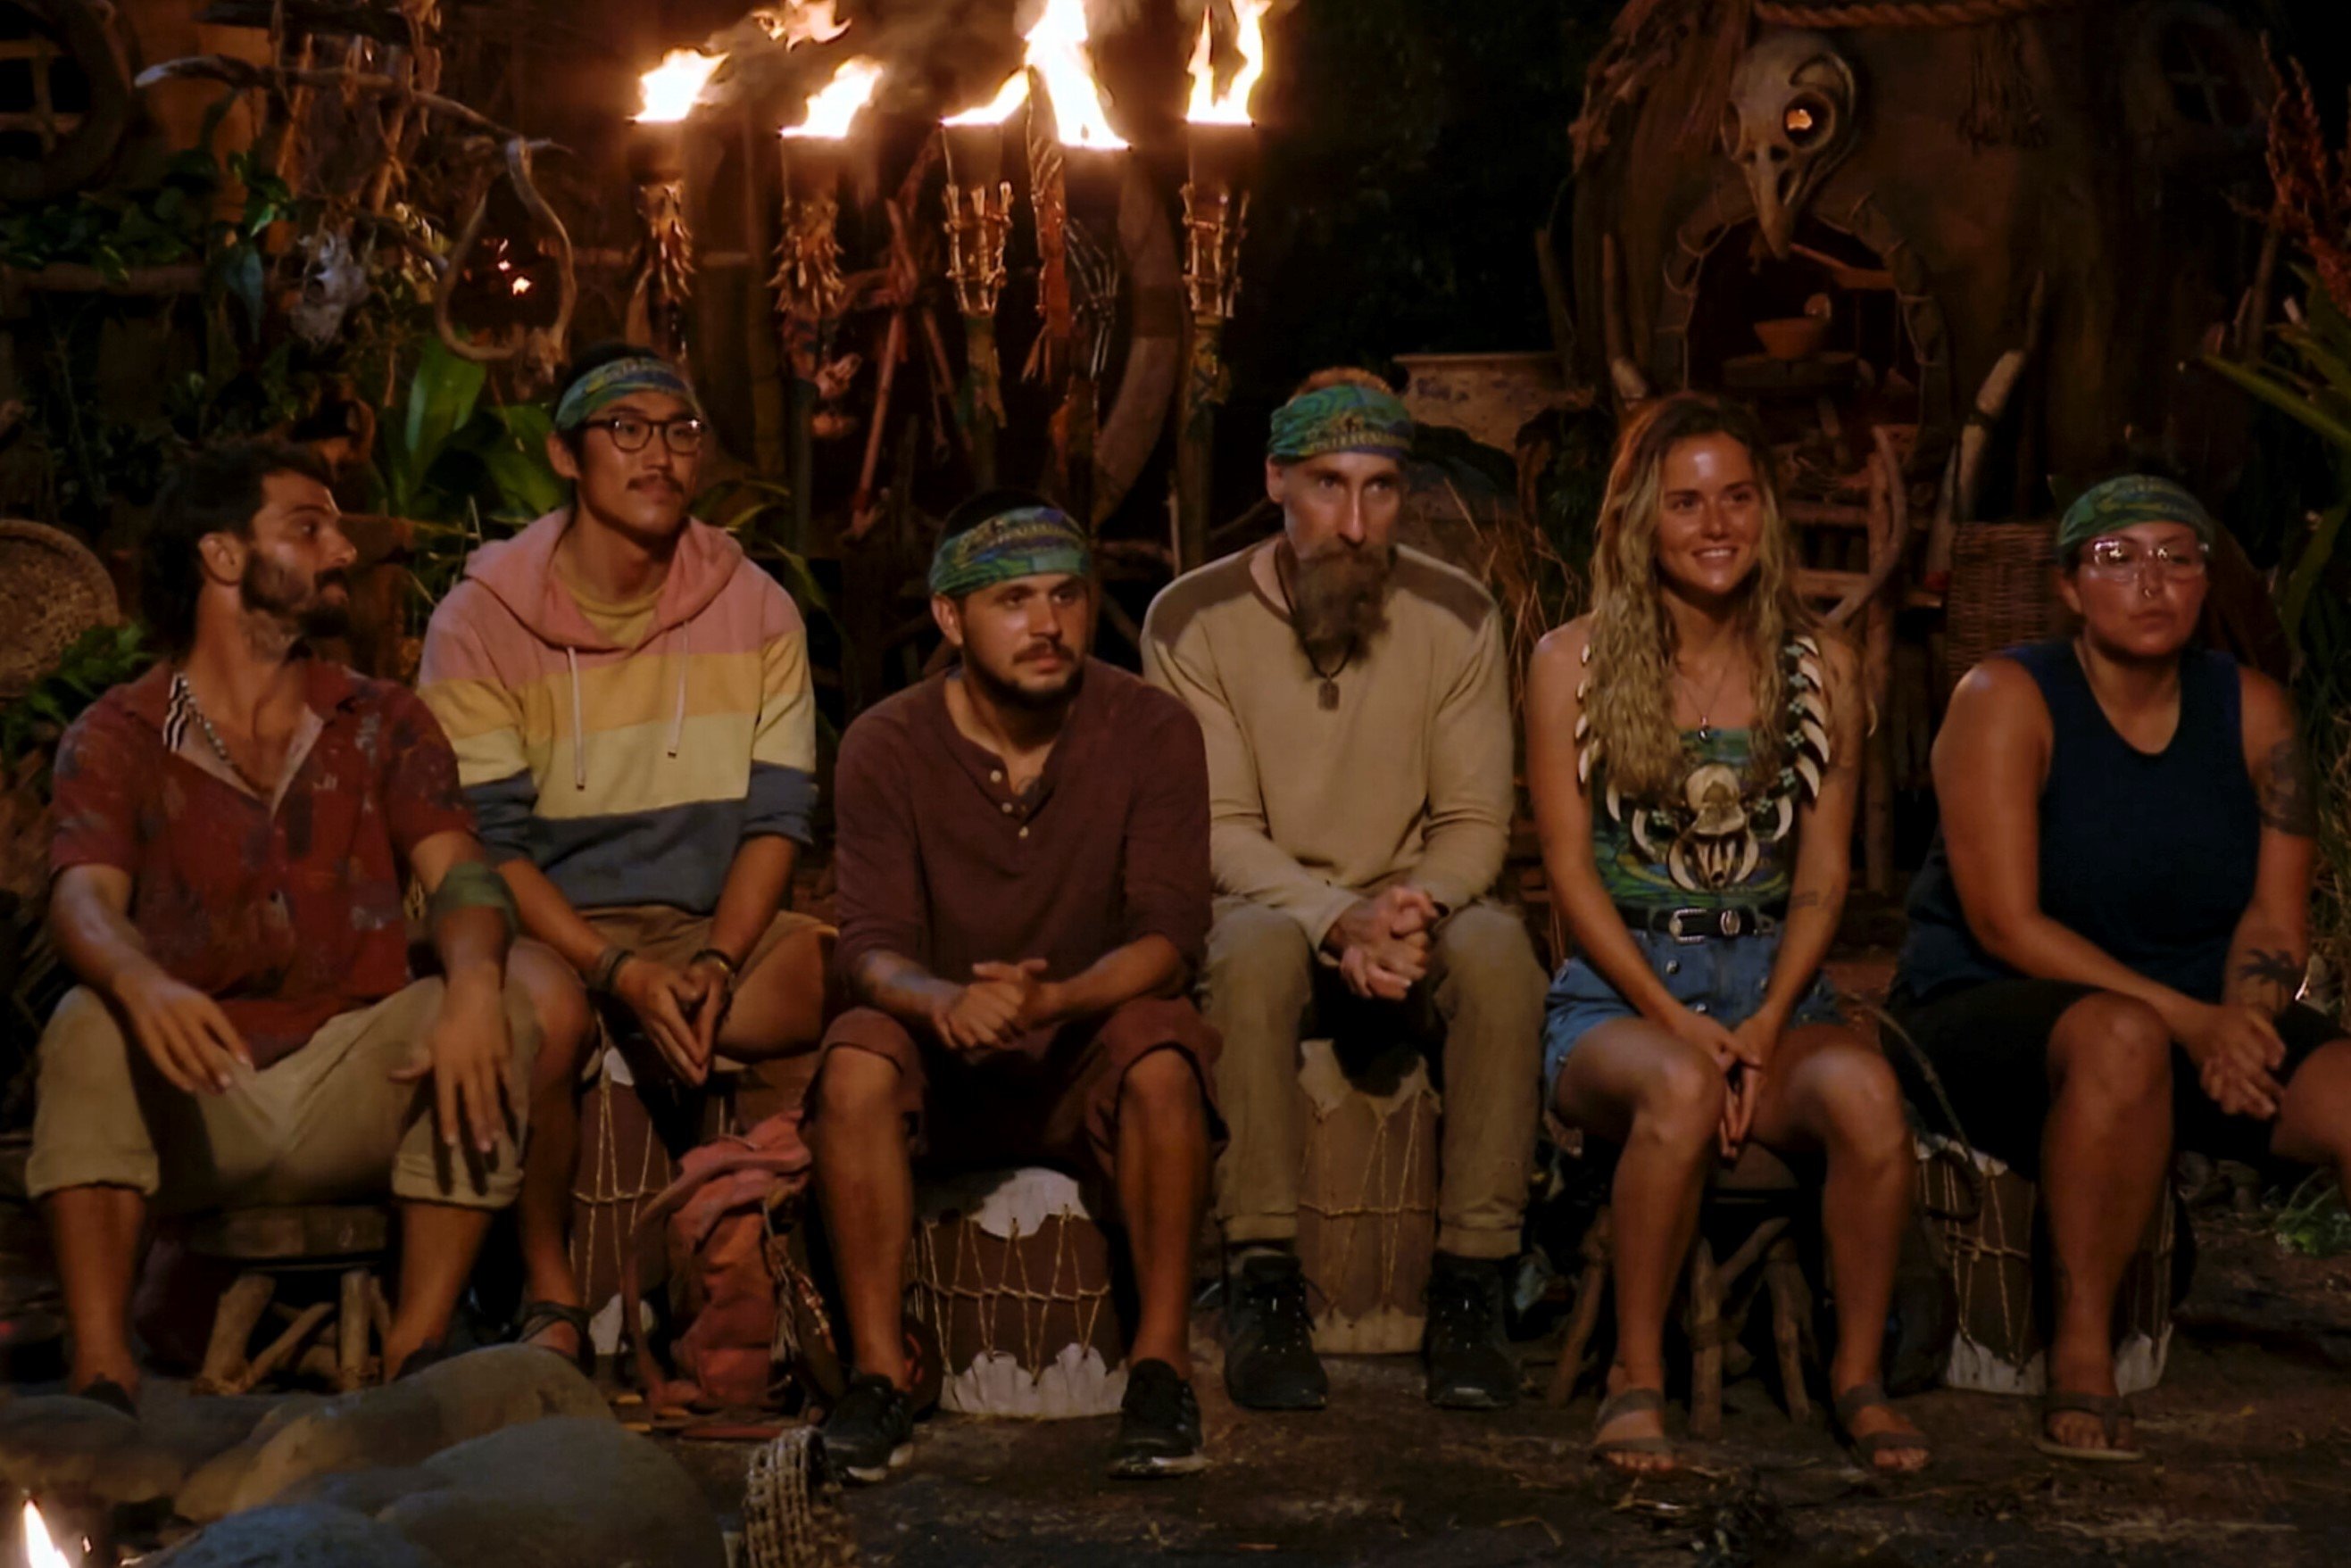 Cody Assenmacher, Owen Knight, Jesse Lopez, Mike Gabler, Cassidy Clark, and Karla Cruz Godoy, who starred in 'Survivor' Season 43 in 2022, attend Tribal Council in episode 12.